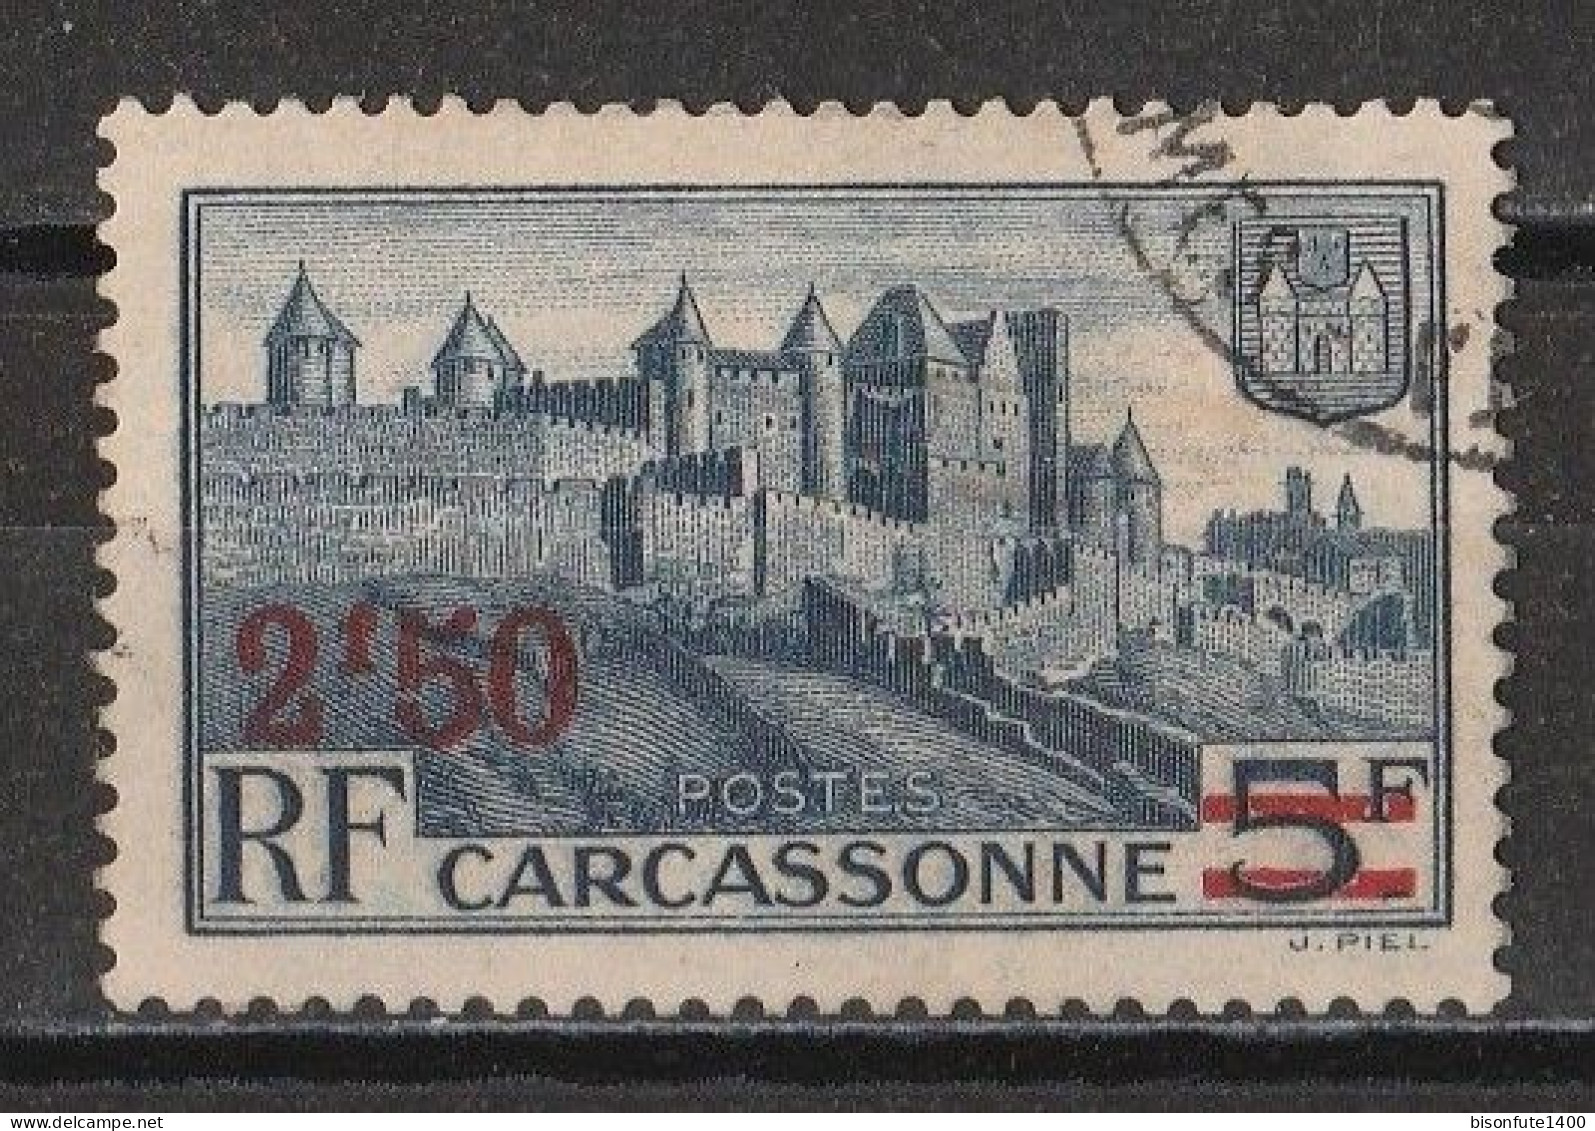 France 1941 : Timbres Yvert & Tellier N° 476 - 477 - 478 - 479 - 482 - 483 - 485 - 486 - 487 Et 490 Avec Oblit. Rondes. - Used Stamps